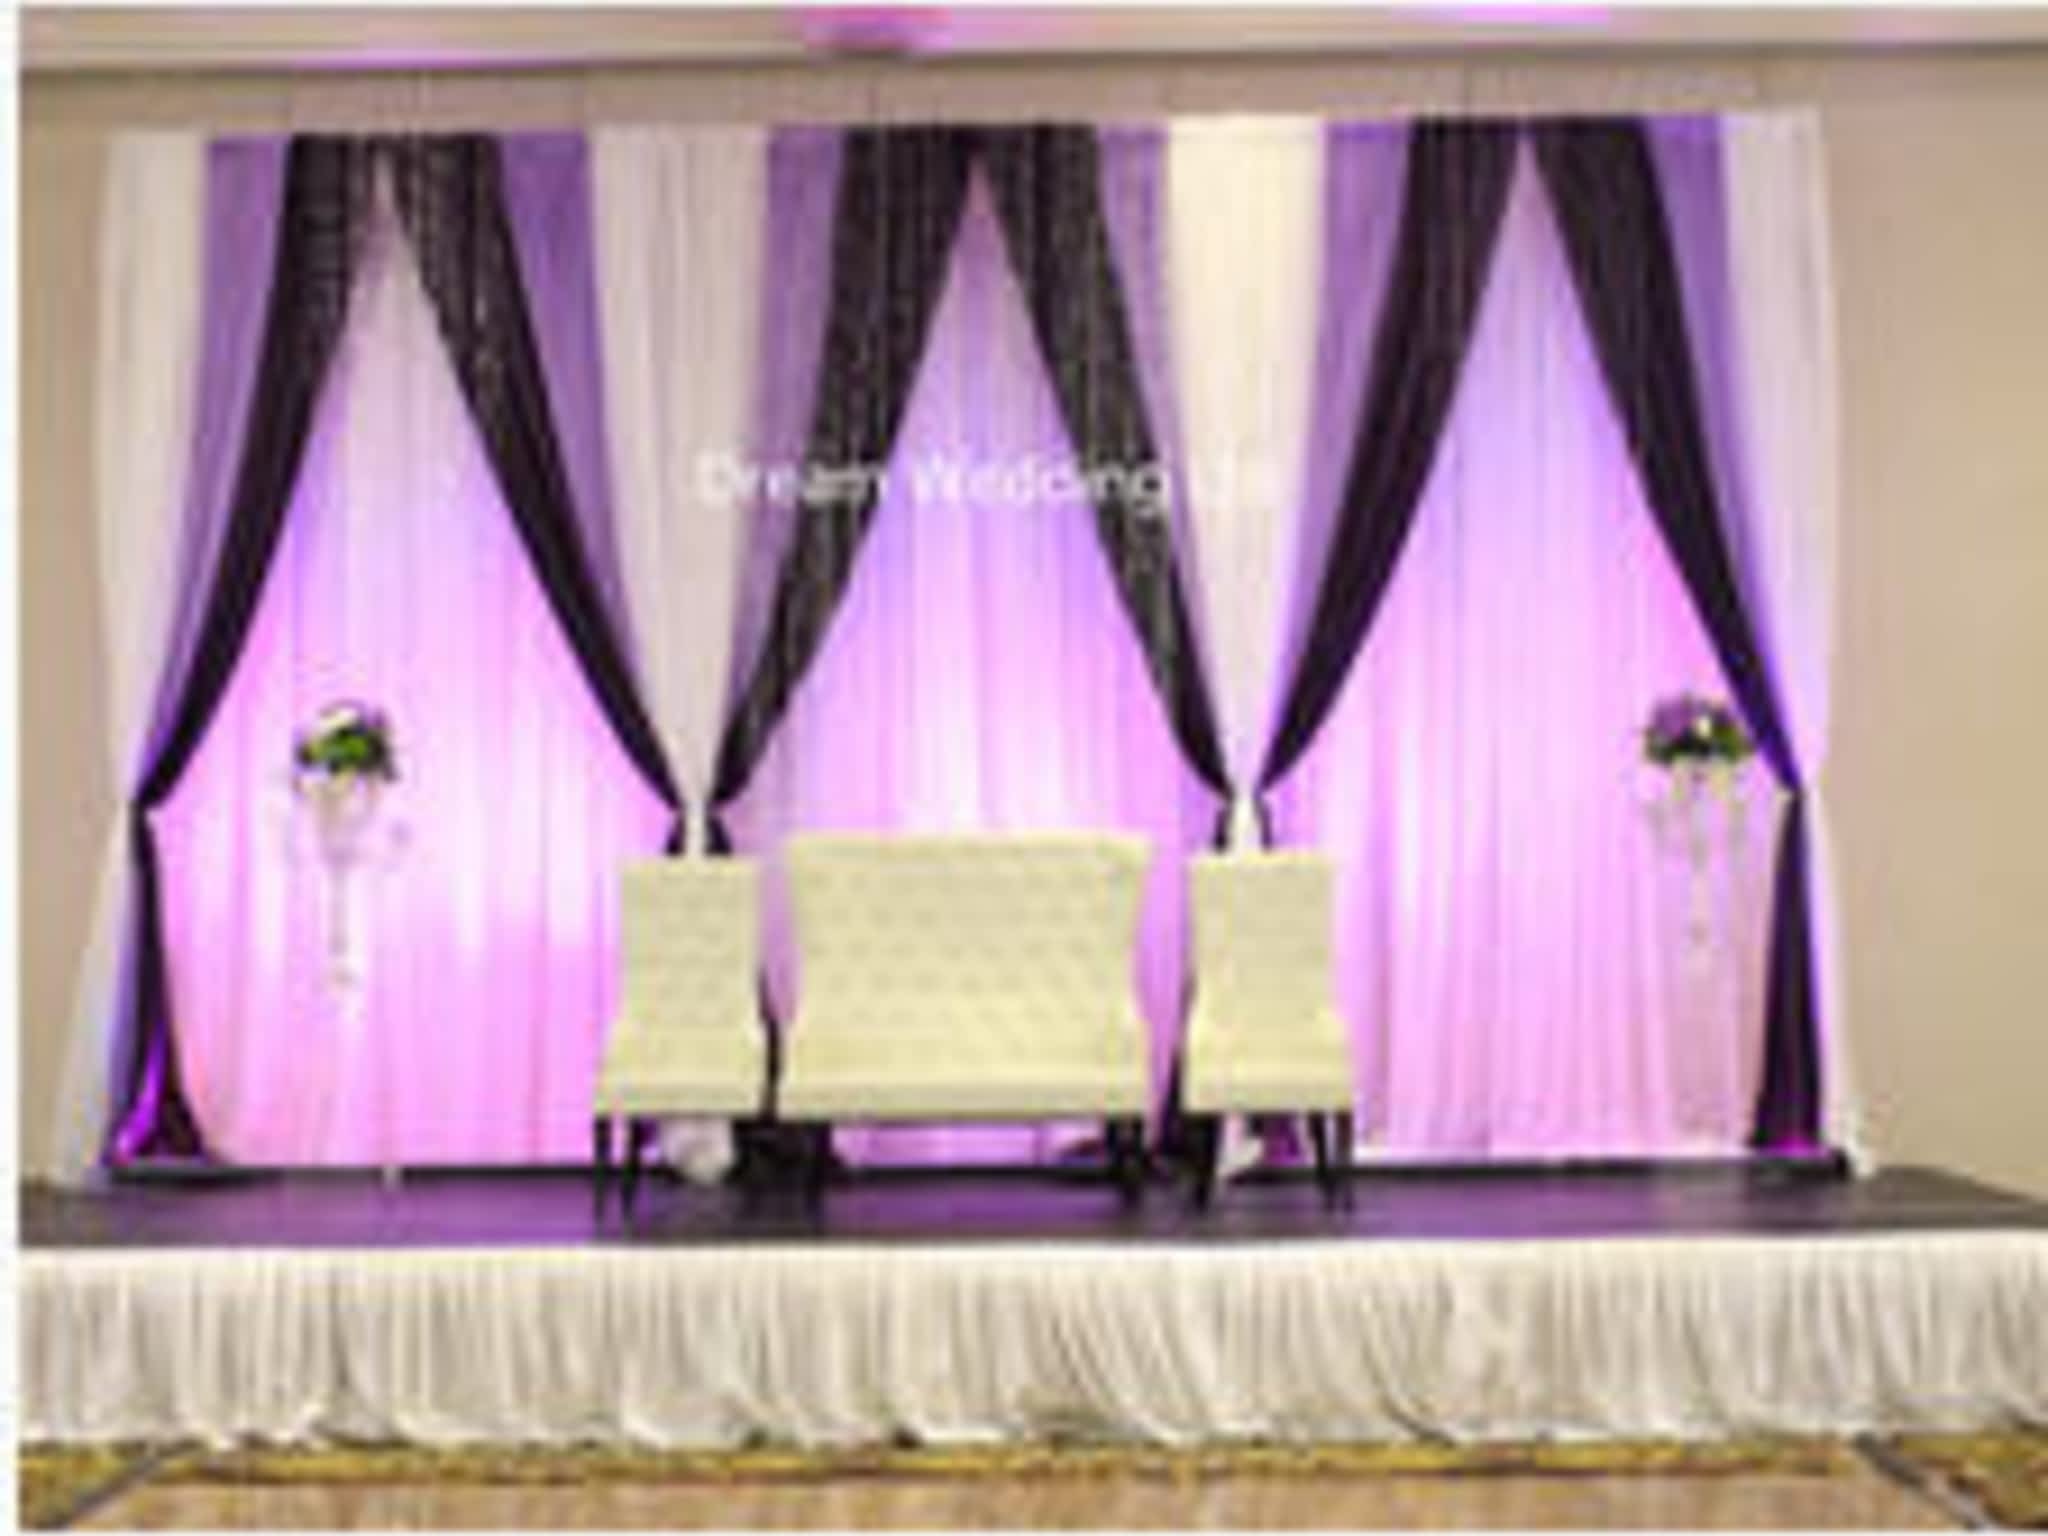 photo Dream Wedding Ltd